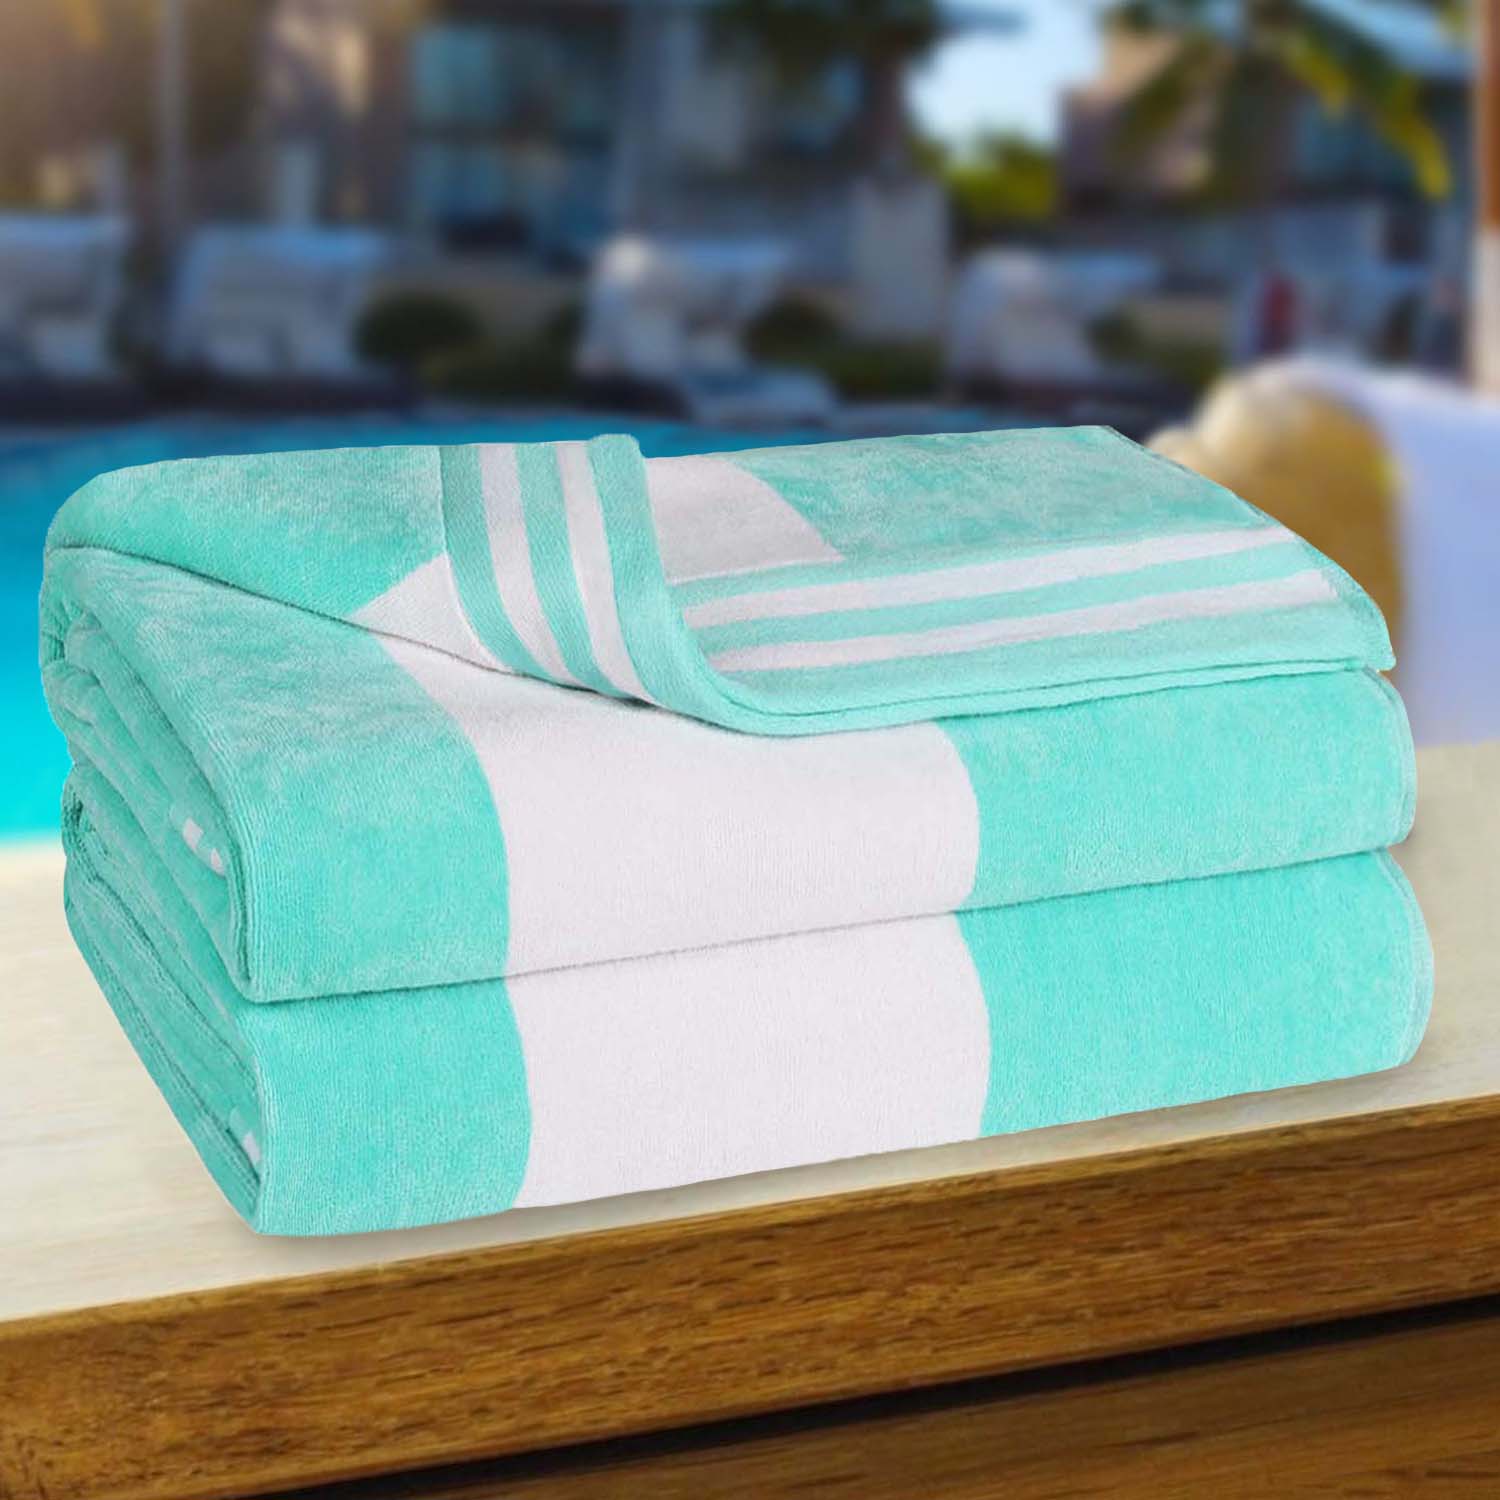 Superior Cabana Stripe Oversized Cotton Beach Towel Set Of 2,4,6 - Mint